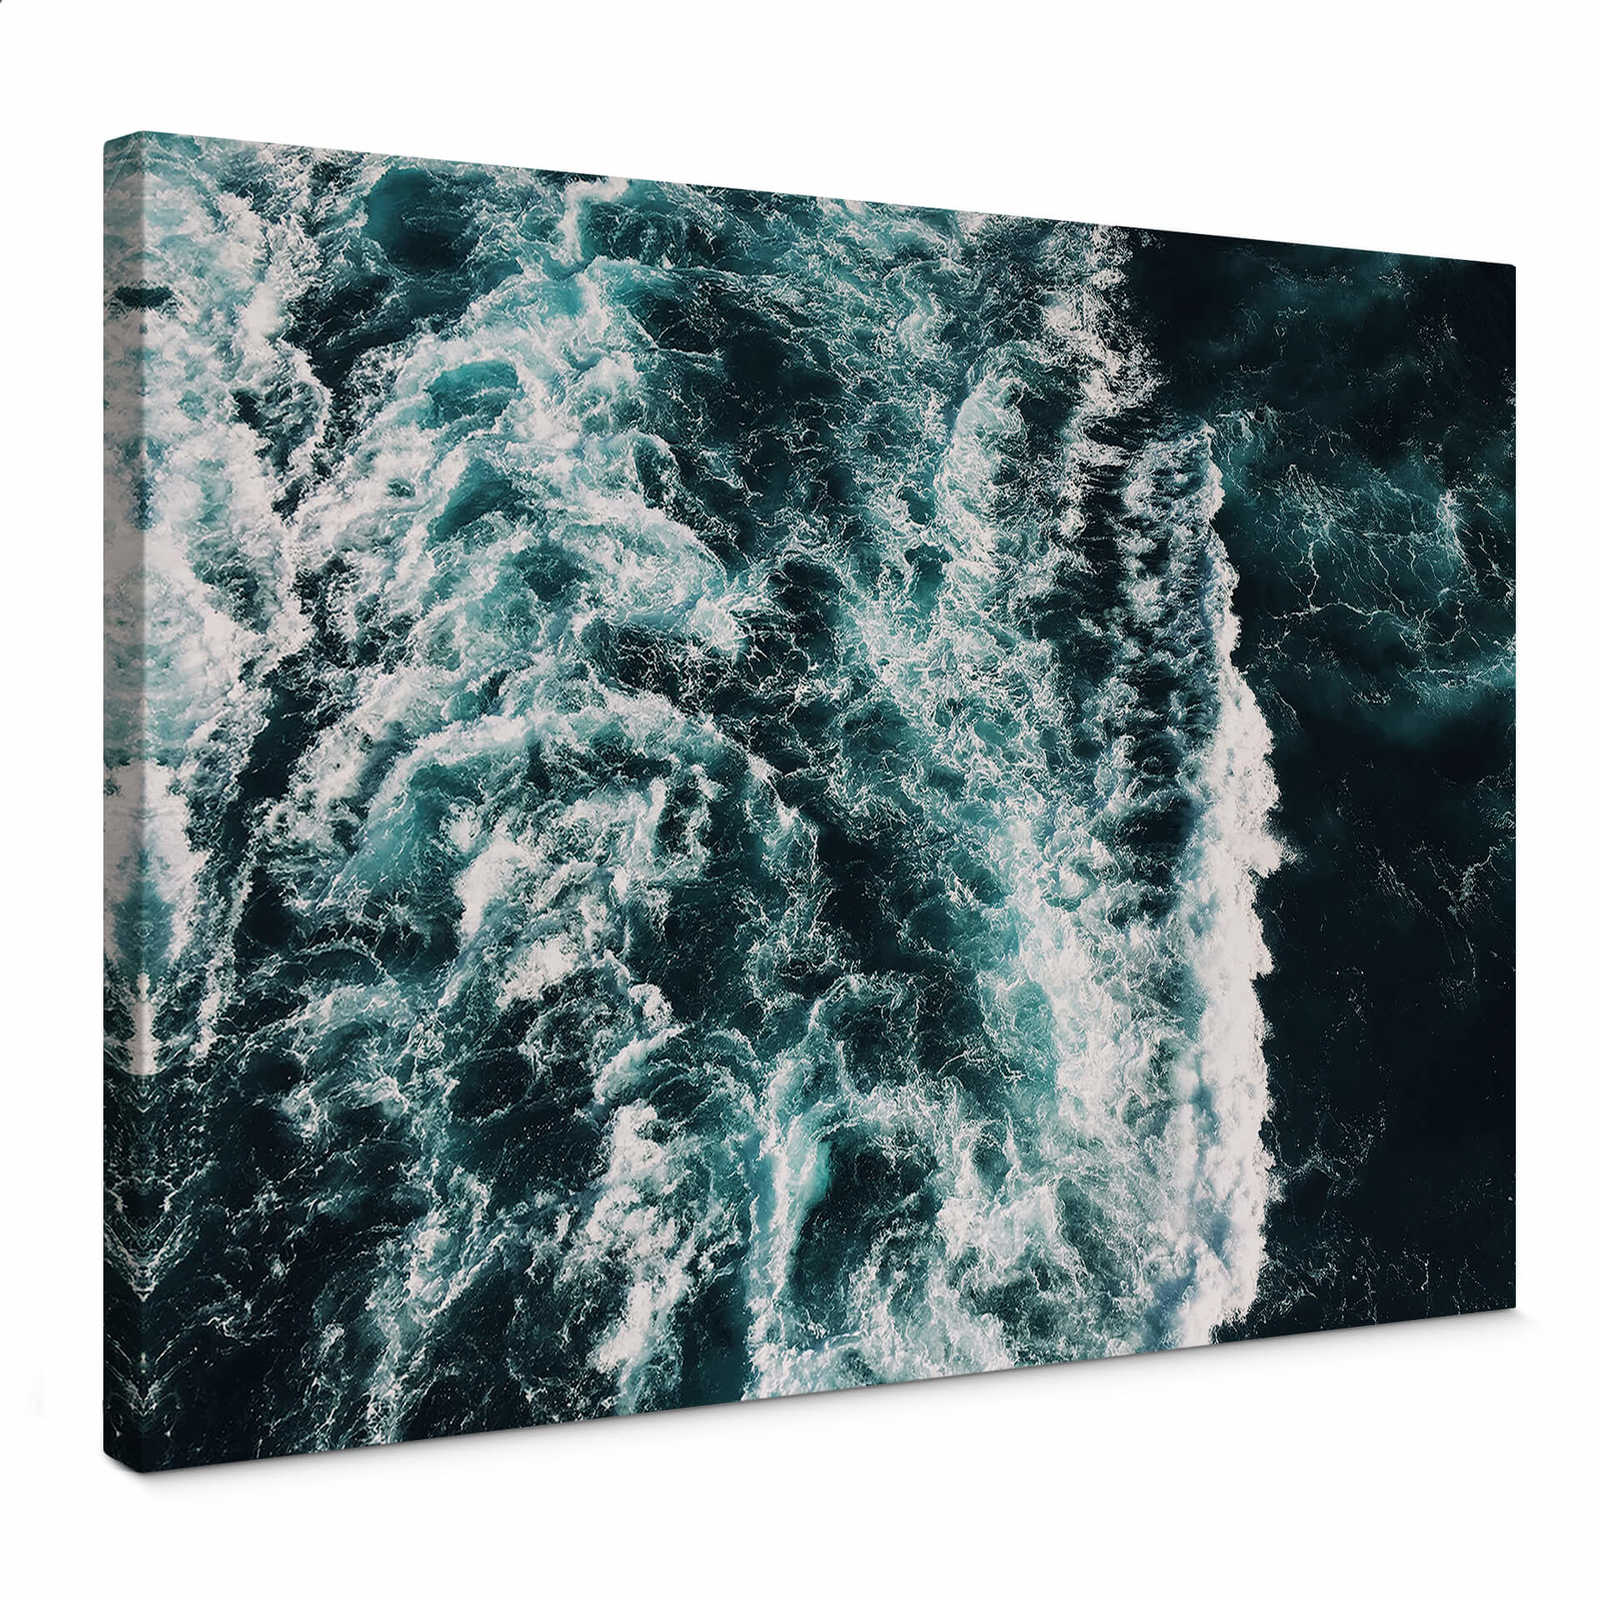         Blue sea canvas print with wave motif
    